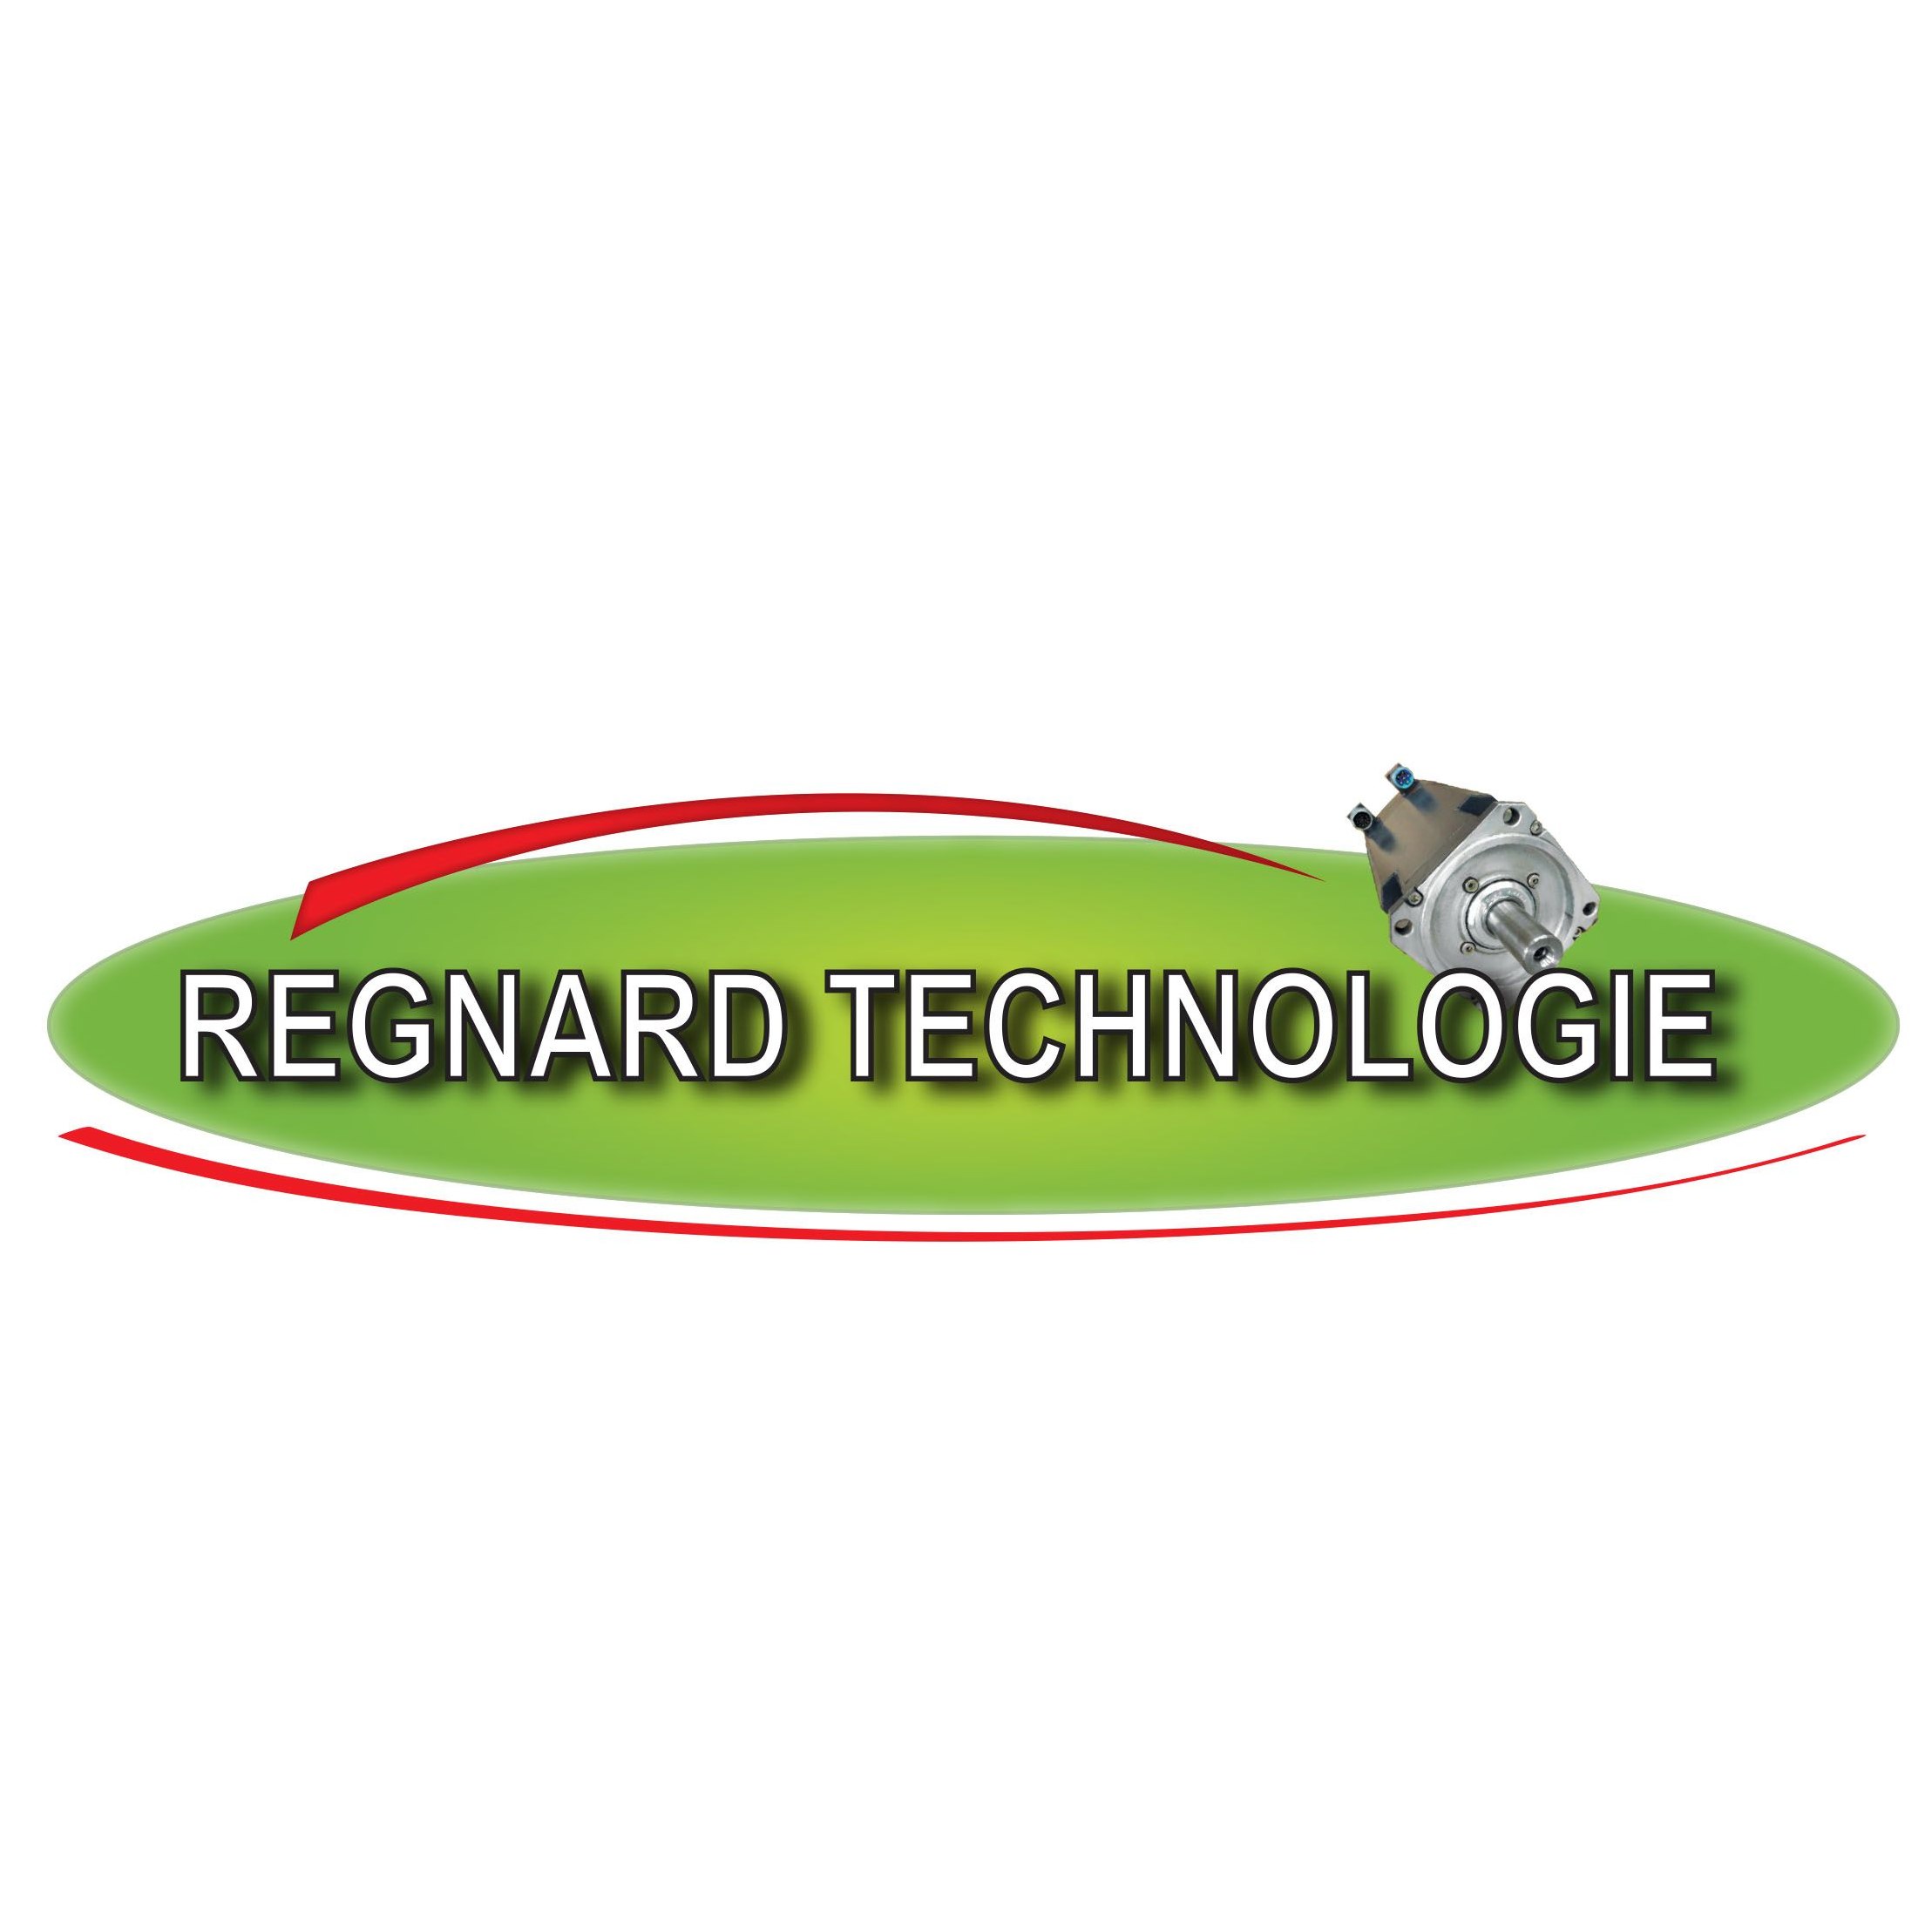 REGNARD TECHNOLOGIE